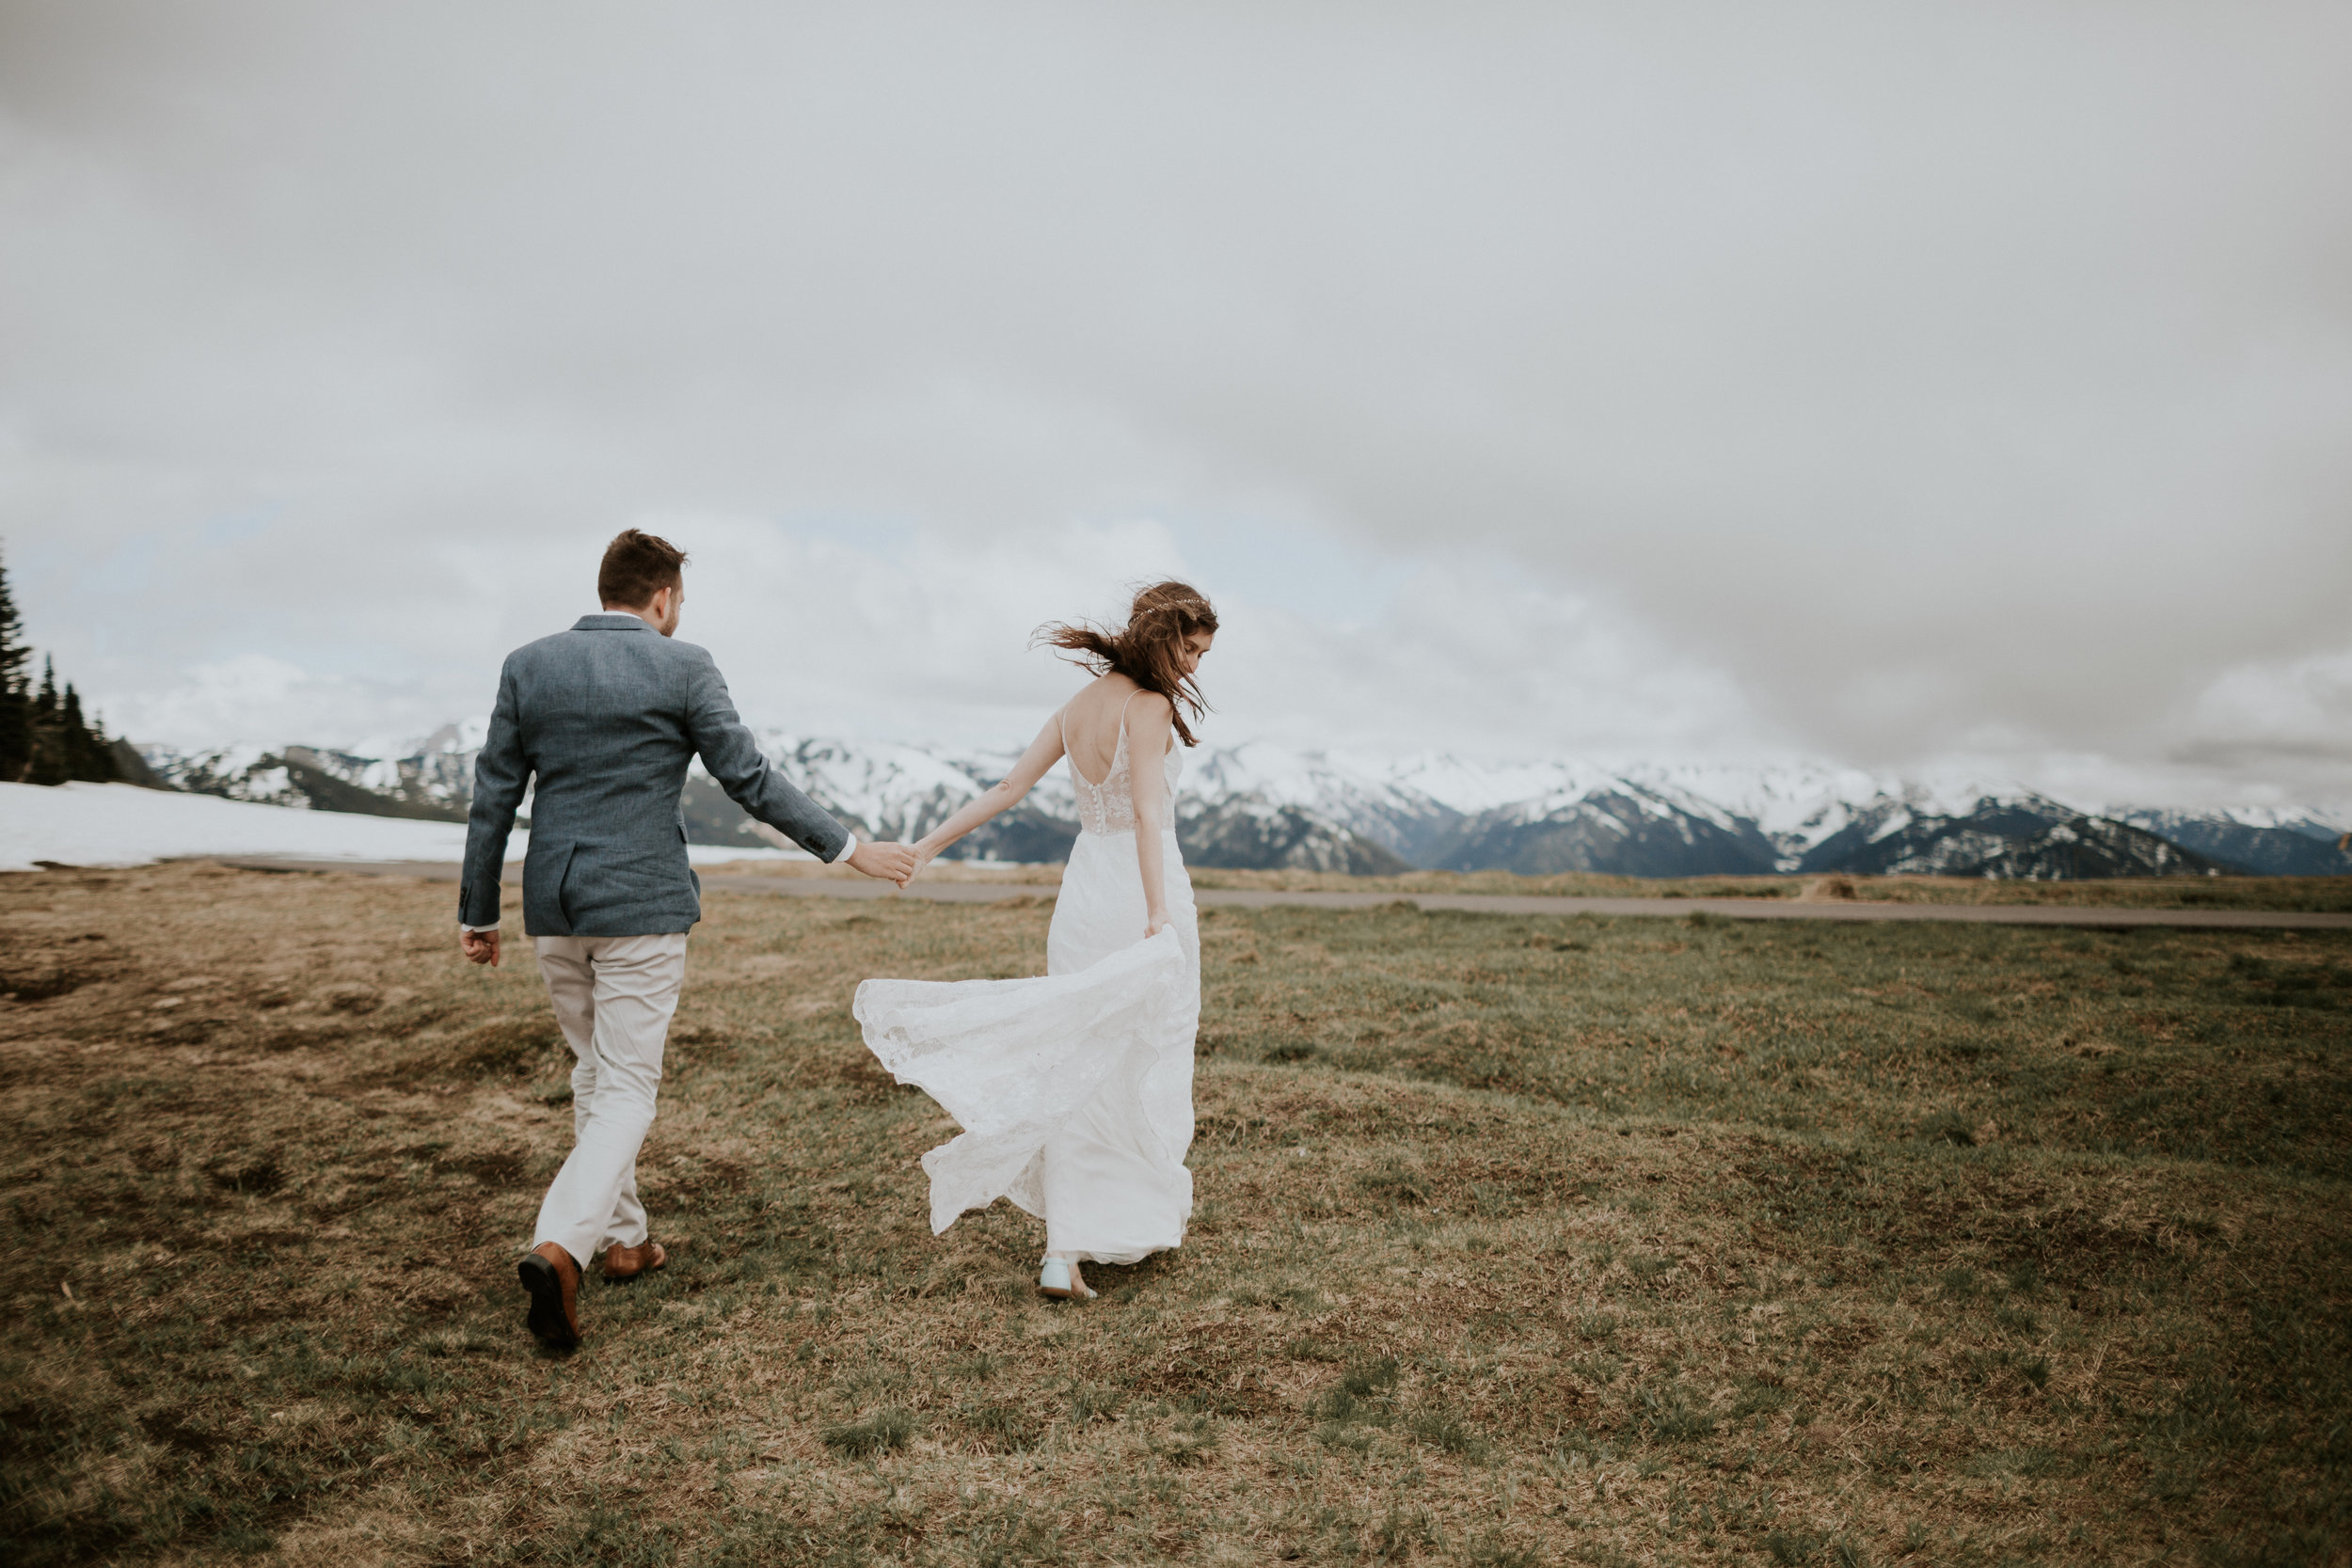 PNW-elopement-wedding-engagement-olympic national park-port angeles-hurricane ridge-lake crescent-kayla dawn photography- photographer-photography-kayladawnphoto-188.jpg